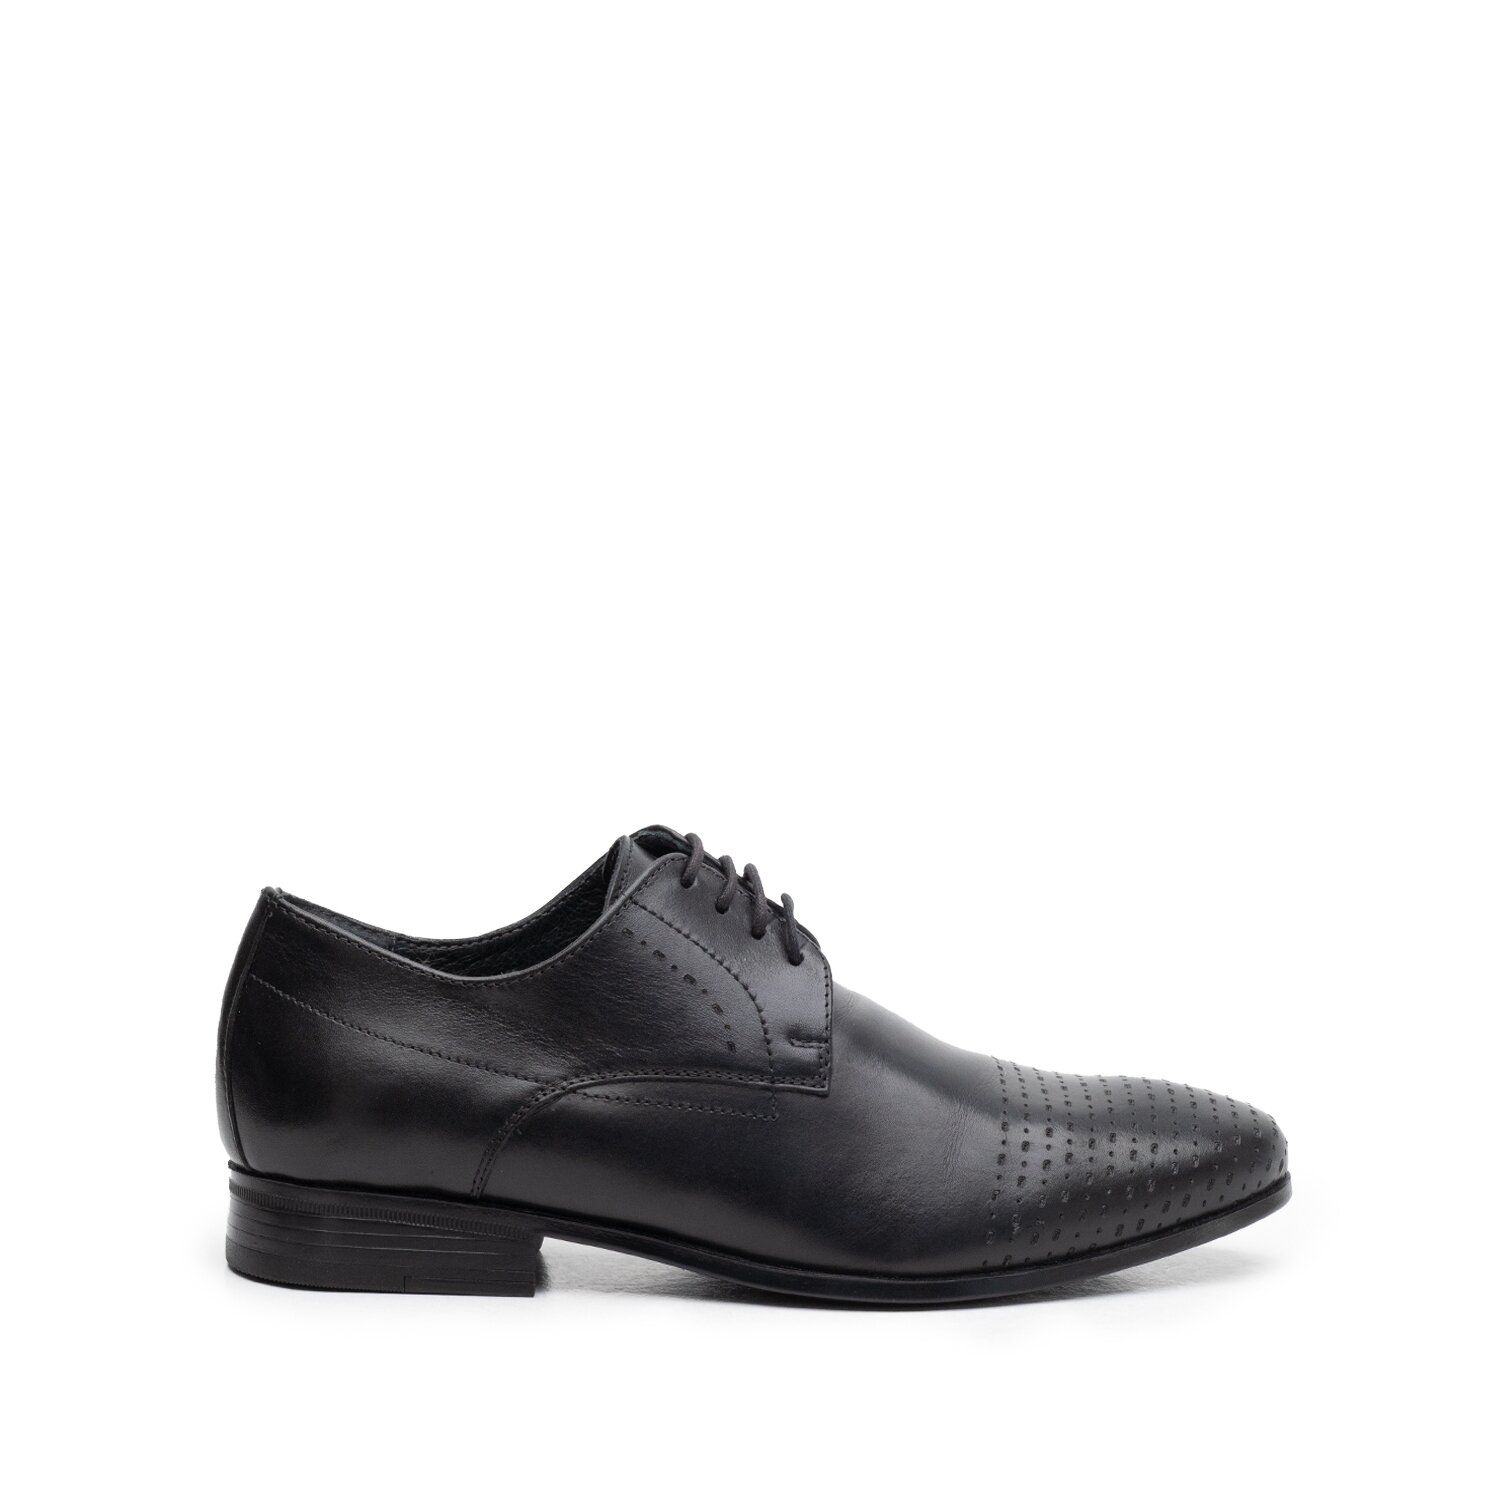 Pantofi eleganti barbati din piele naturala, Leofex - 888 negru